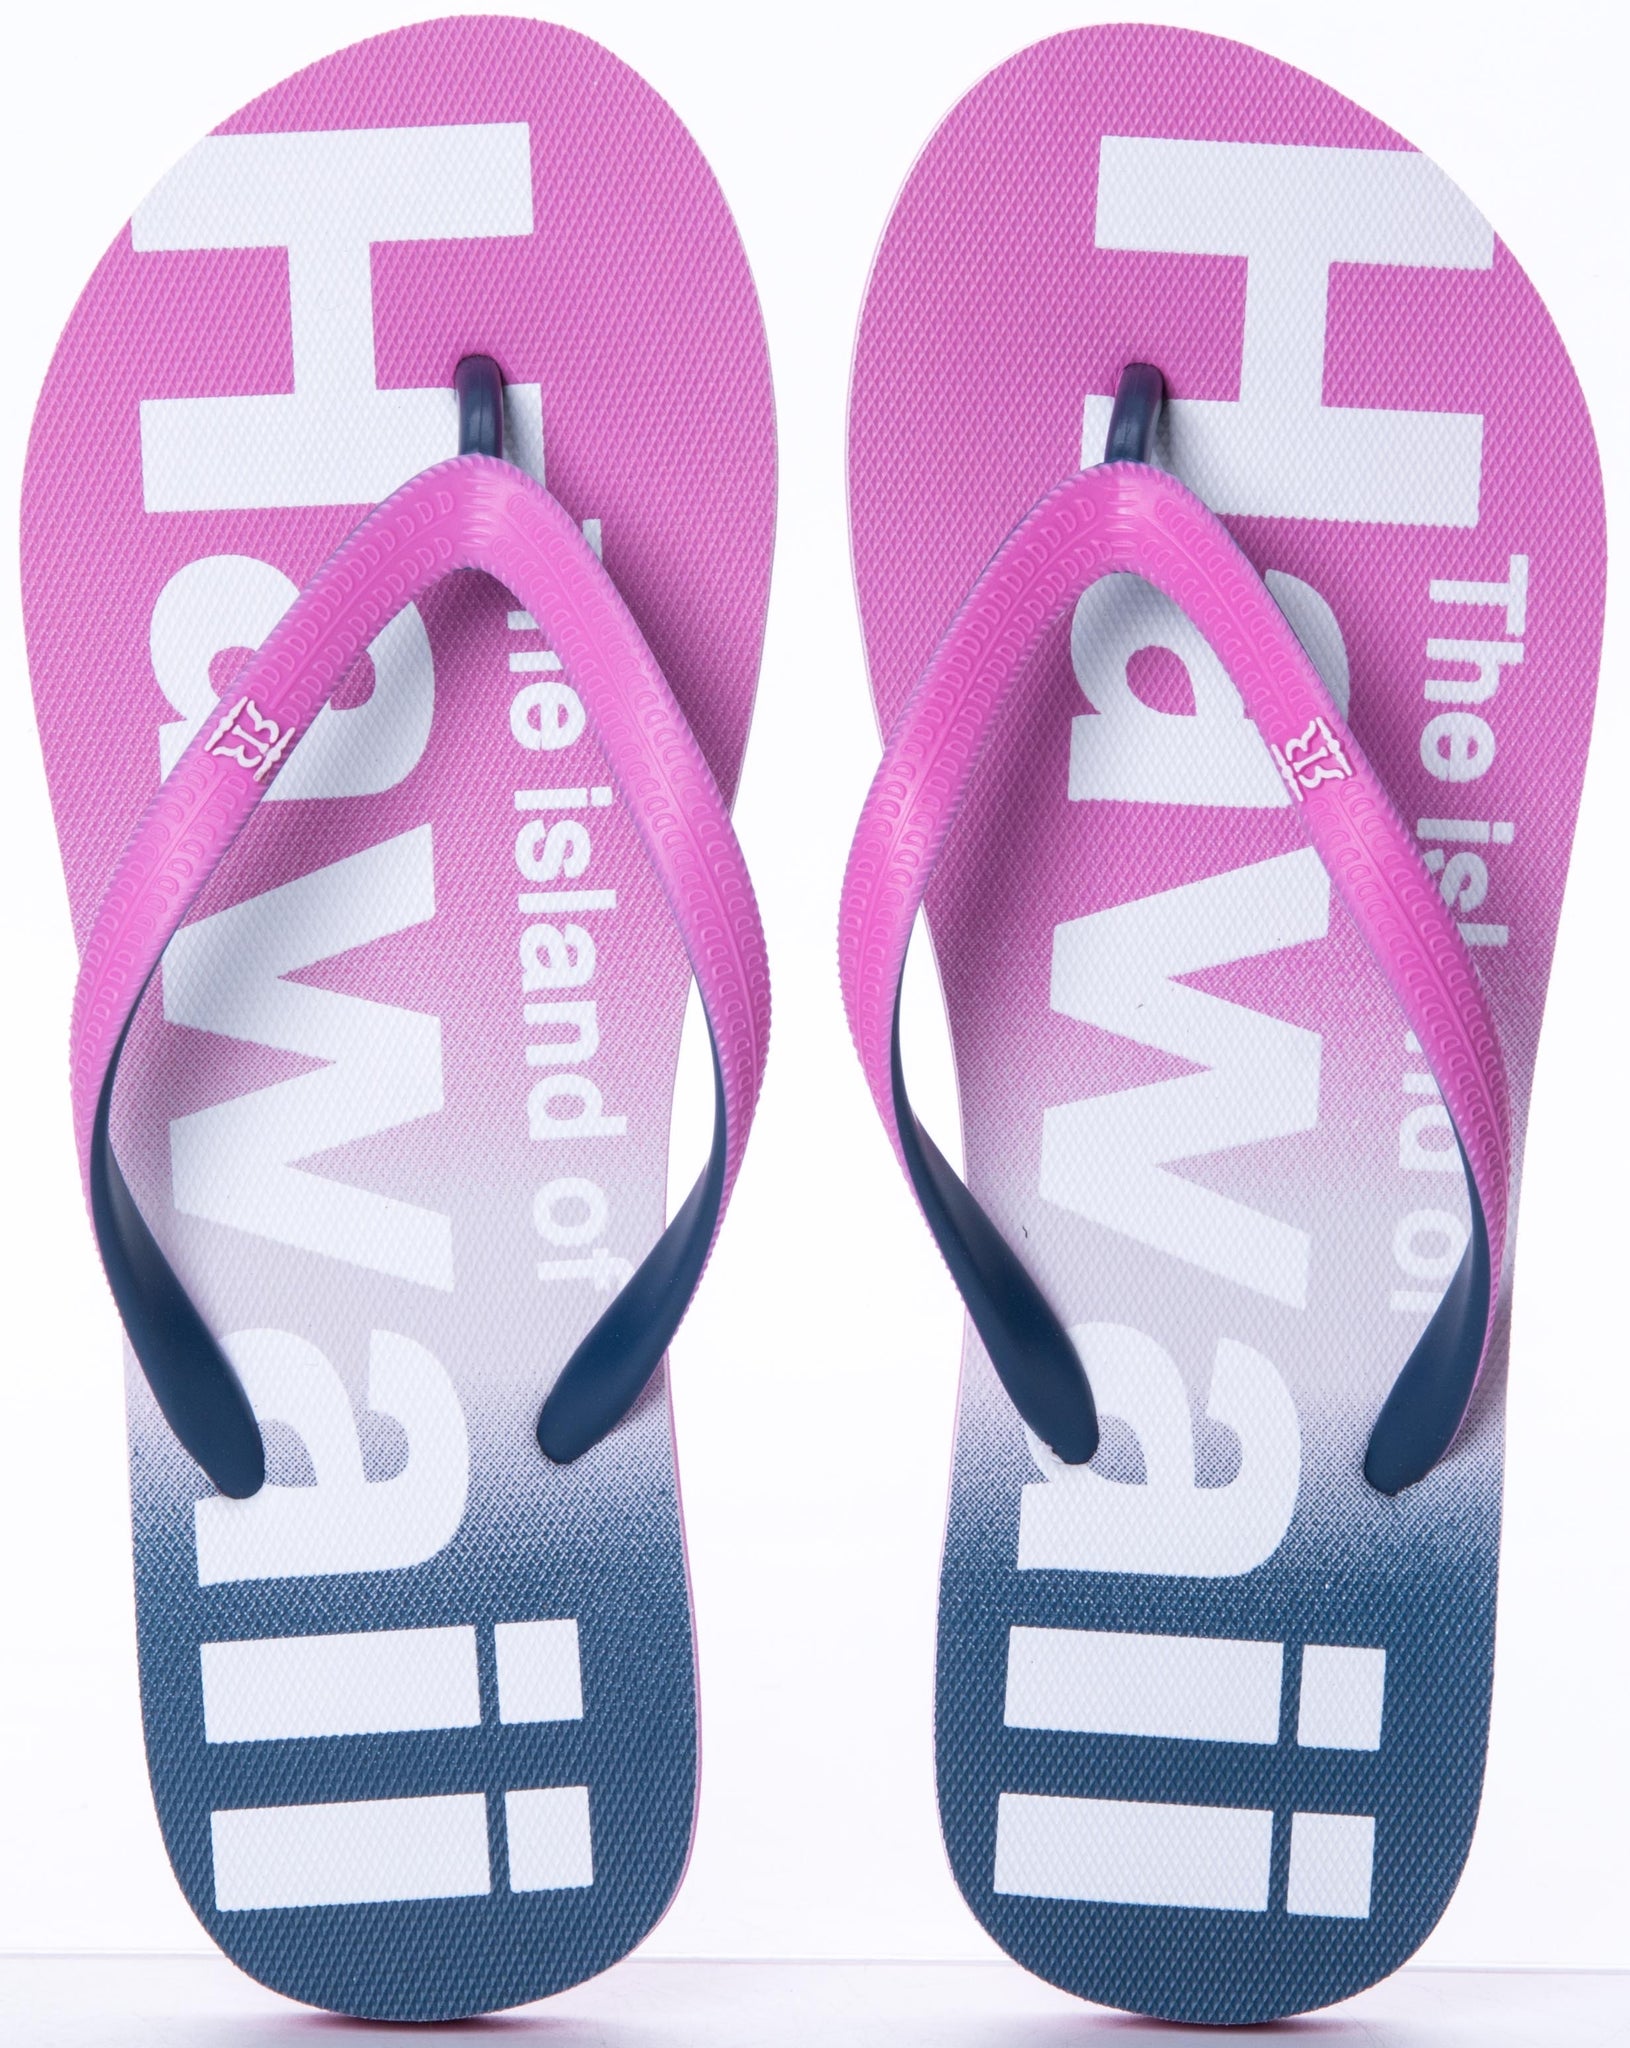 The Perfect Summer Companion: Ladies Ombre Original Flip Flops Hawaii